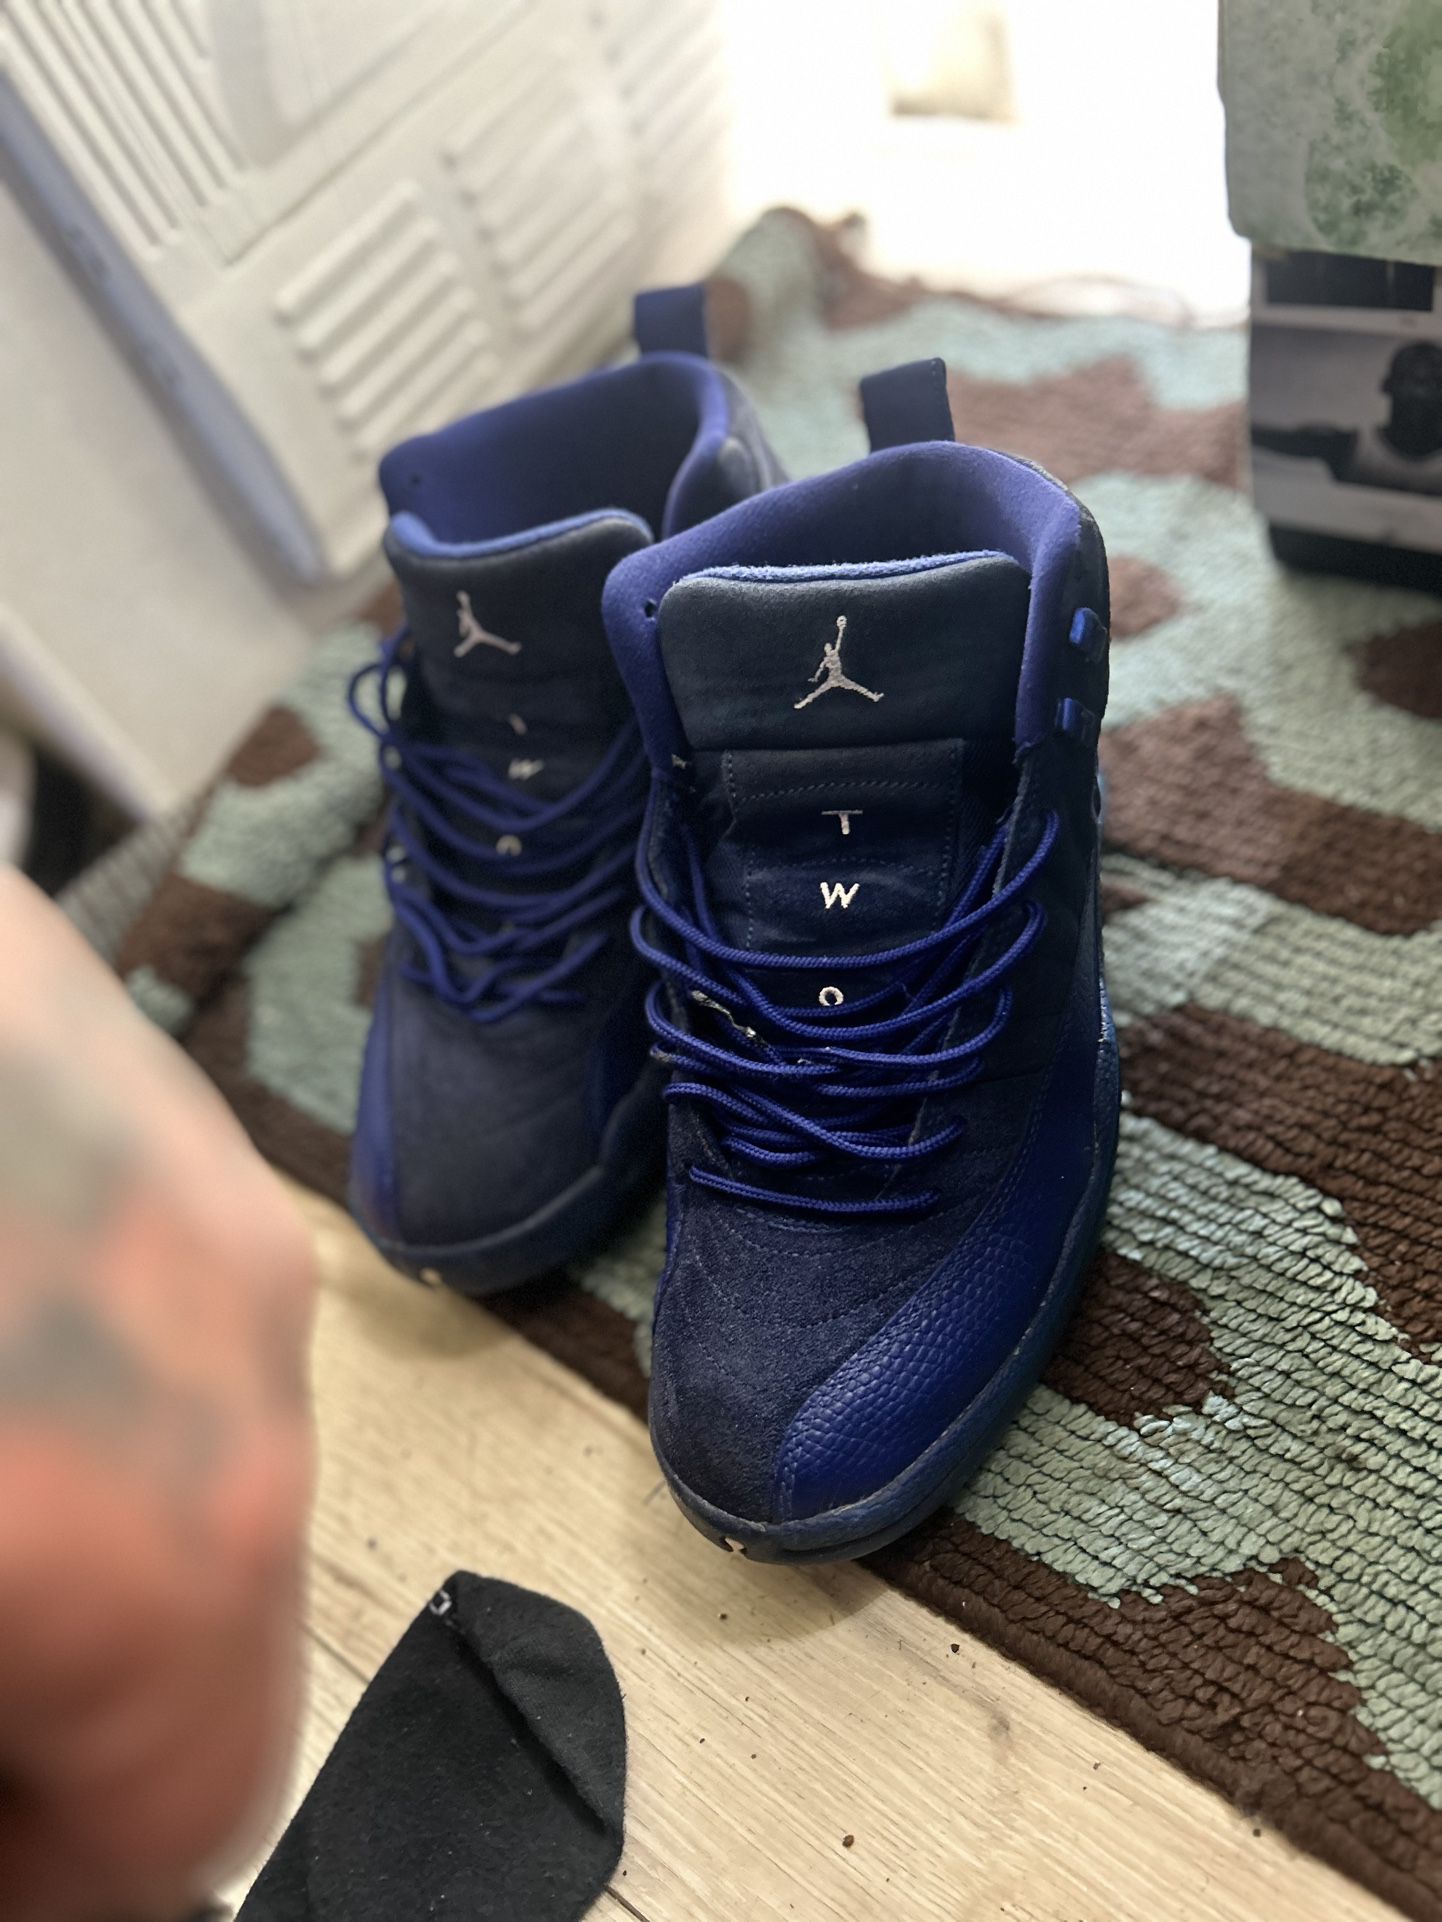 Royal Blue Jordan 12s